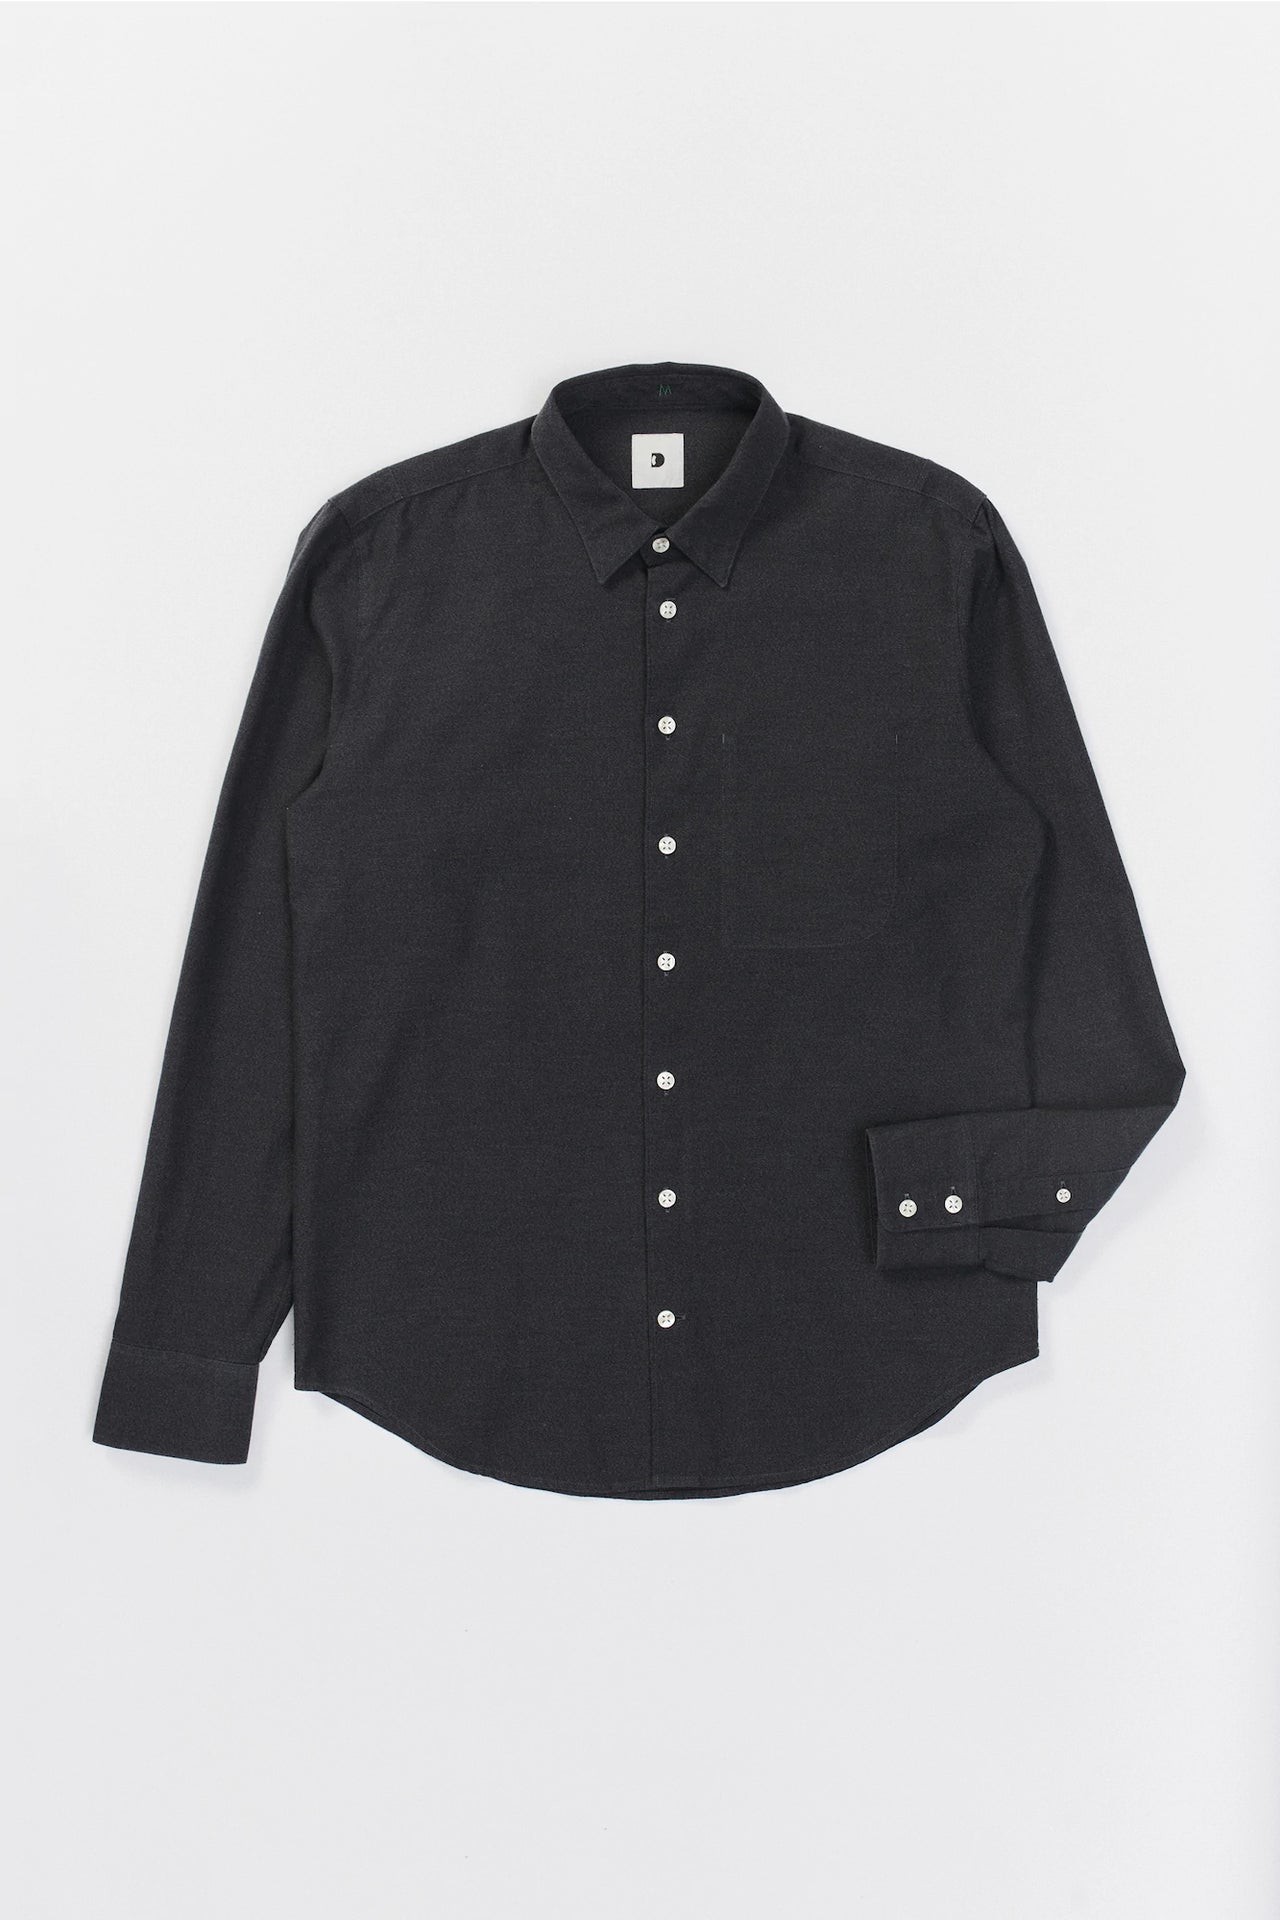 Feel Good Shirt in a Fine Dark Grey Thomas Mason Italian Cotton Oxford